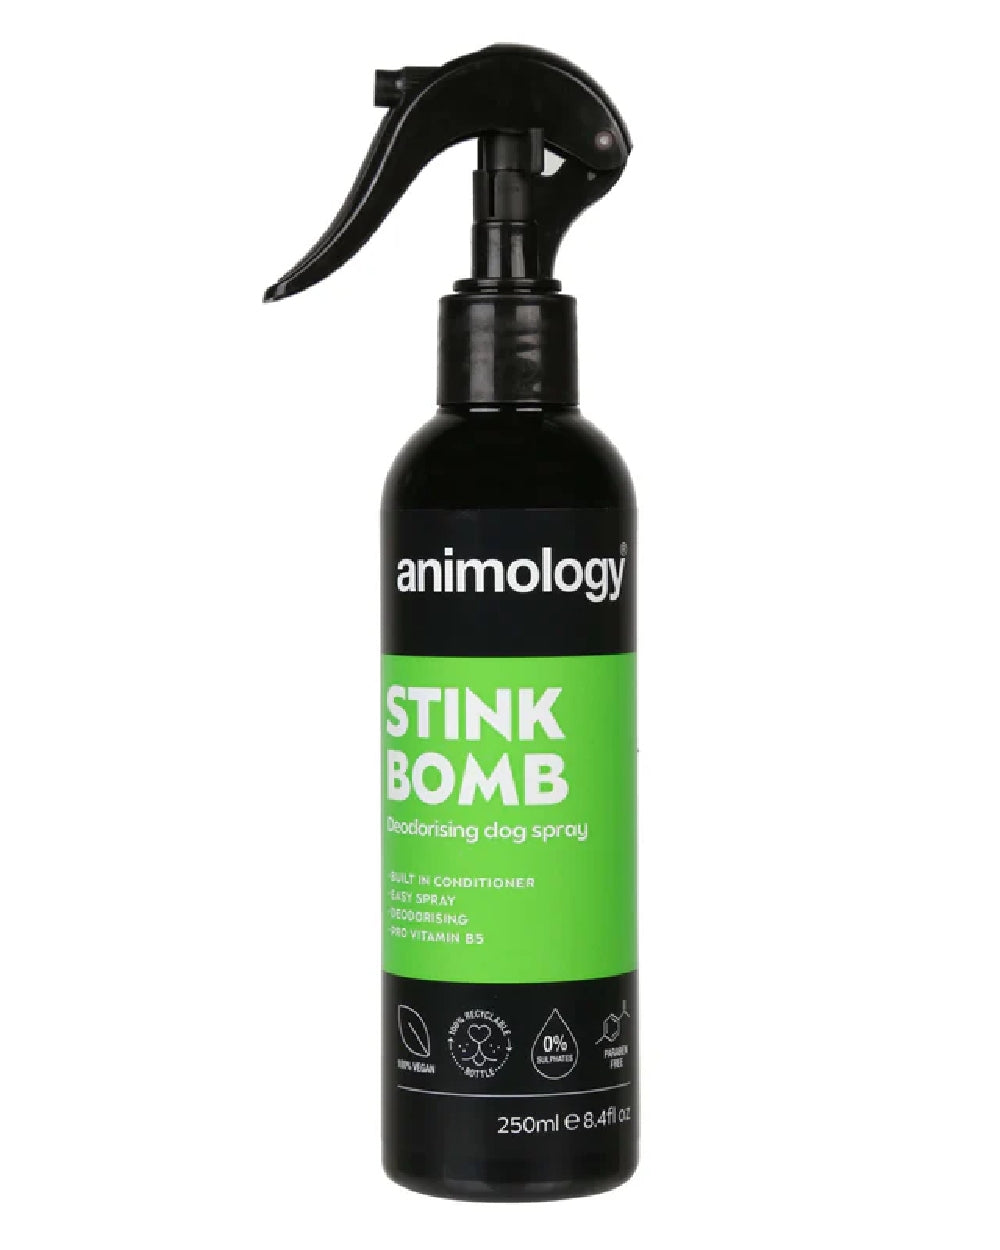 Animology Stink Bomb Deodorising Spray 250ml on white background